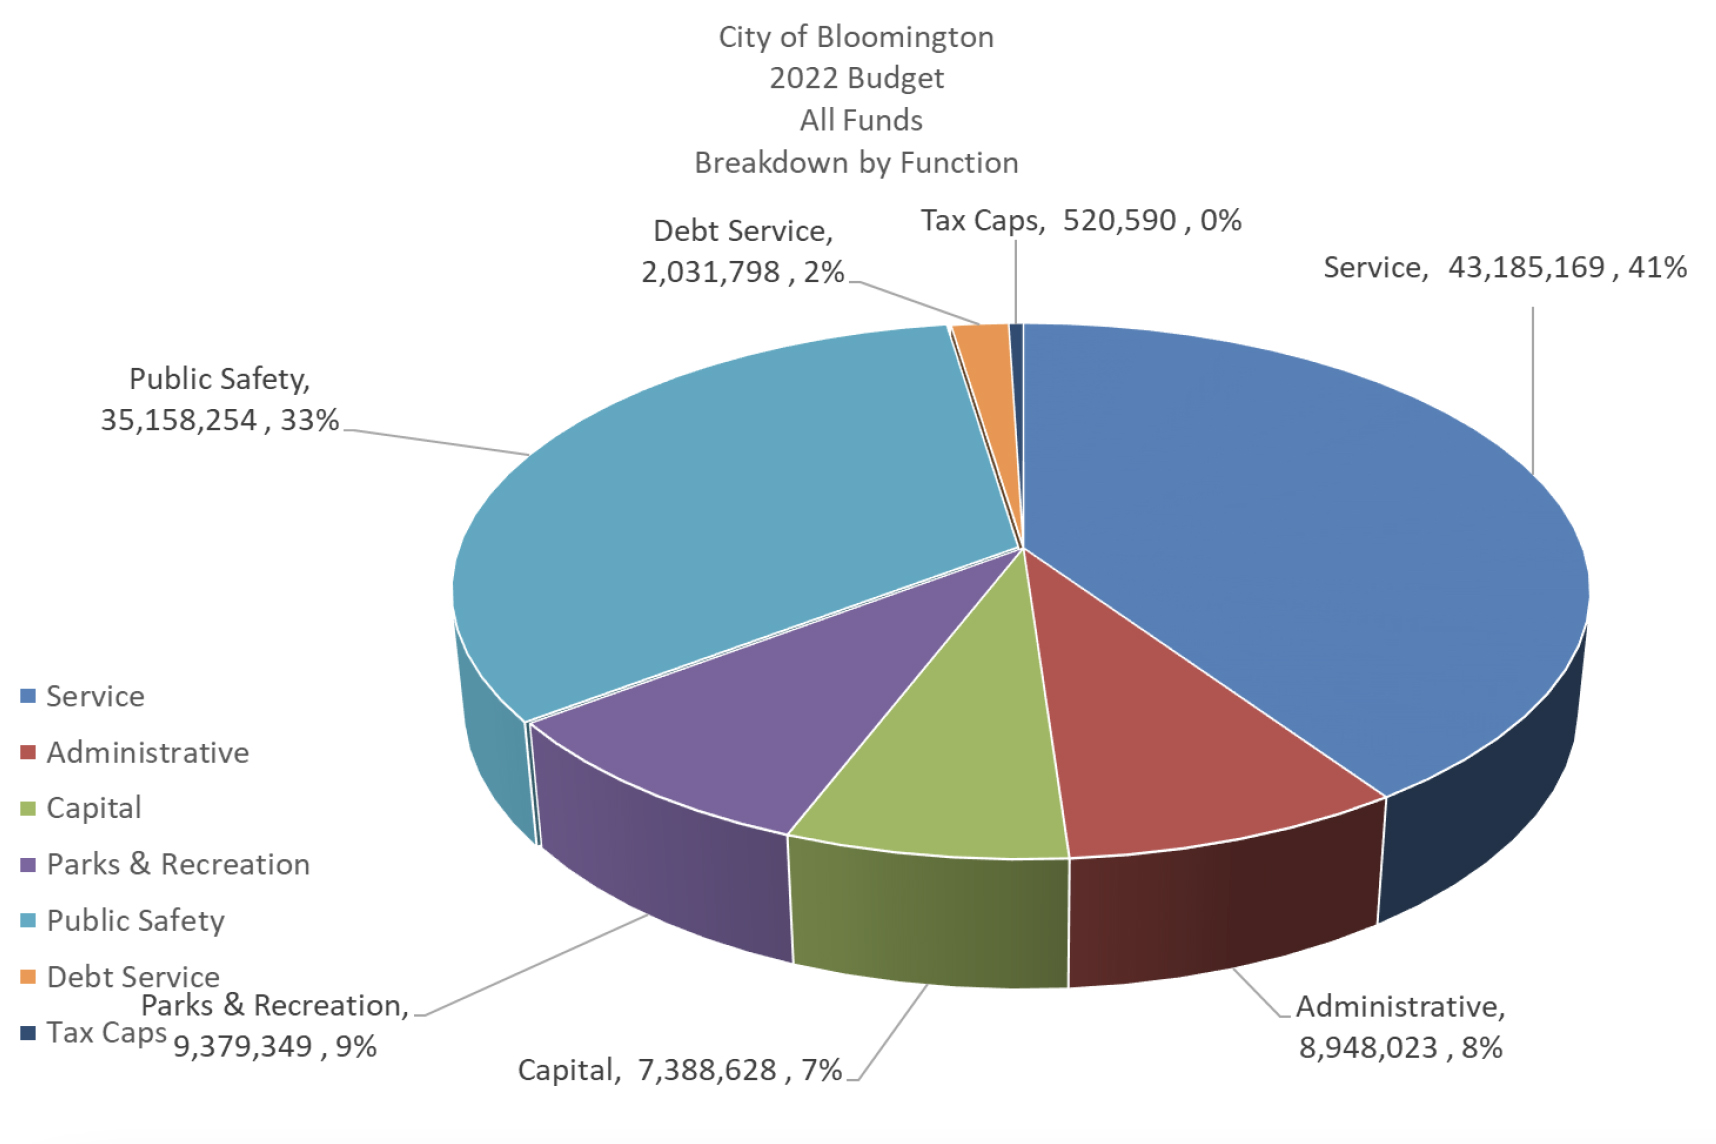 City of Bloomington 2022 Budget